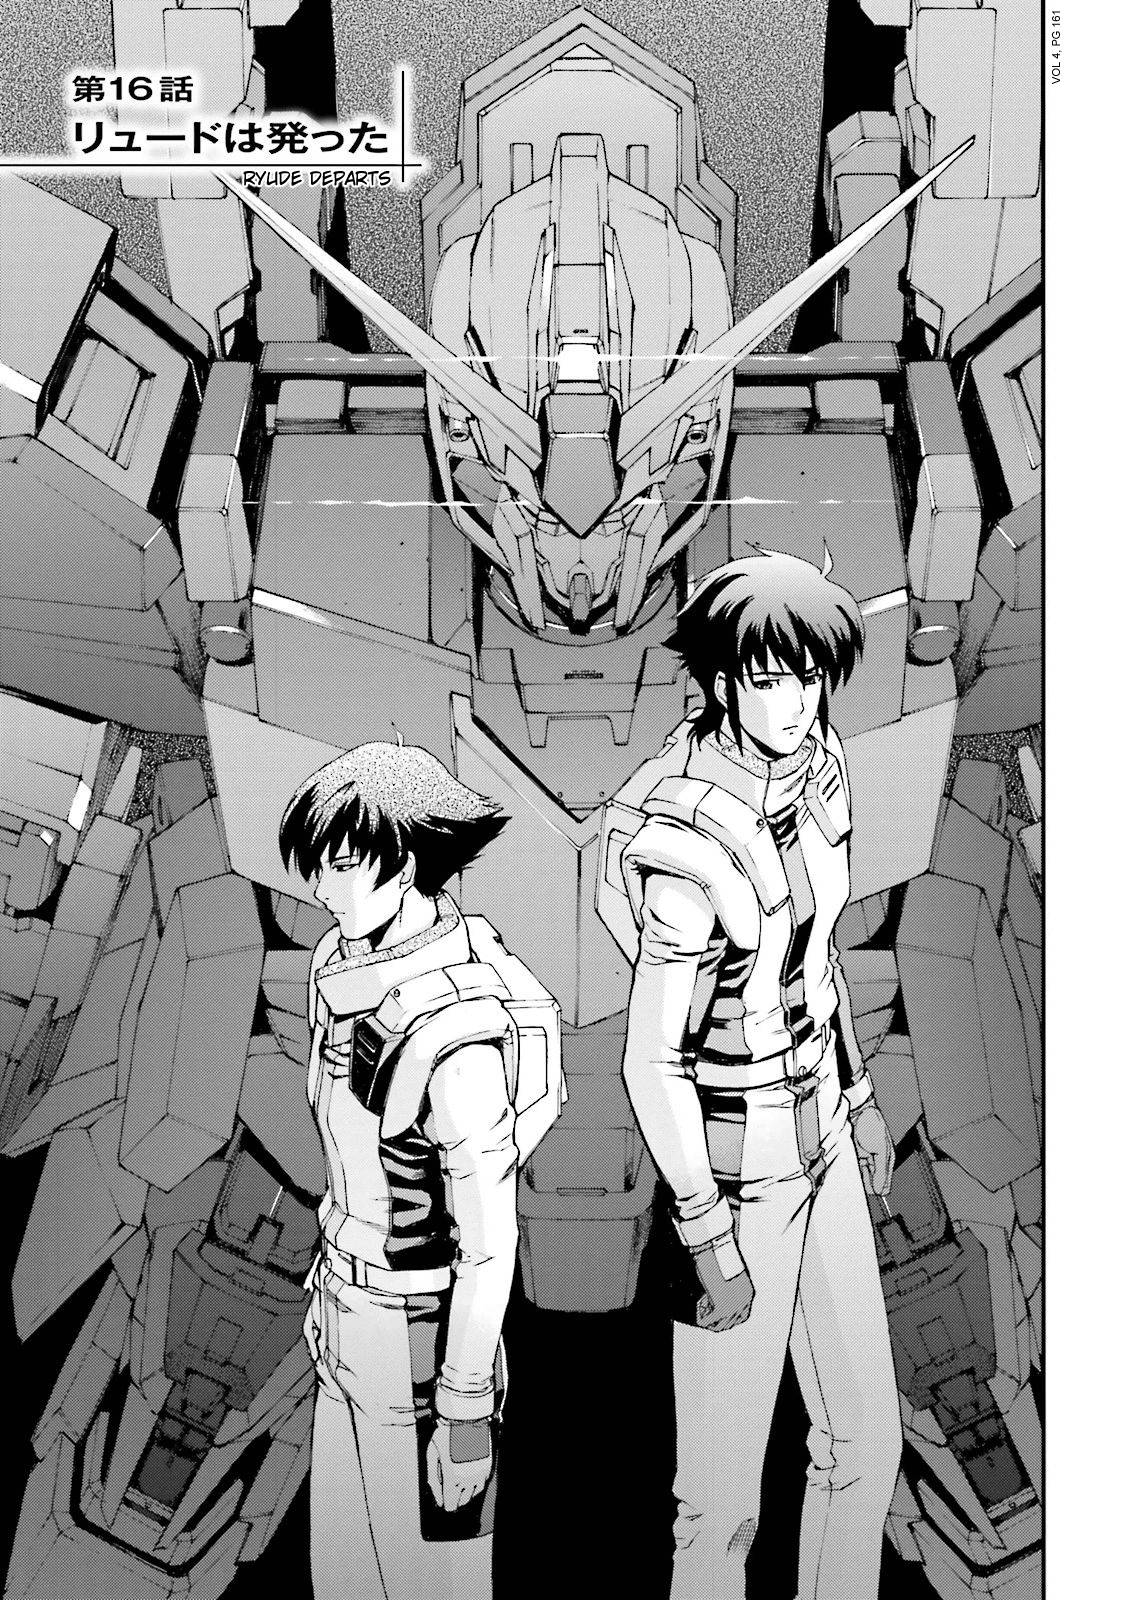 Kidou Senshi Gundam U.C. 0094 - Across The Sky - chapter 16 - #1